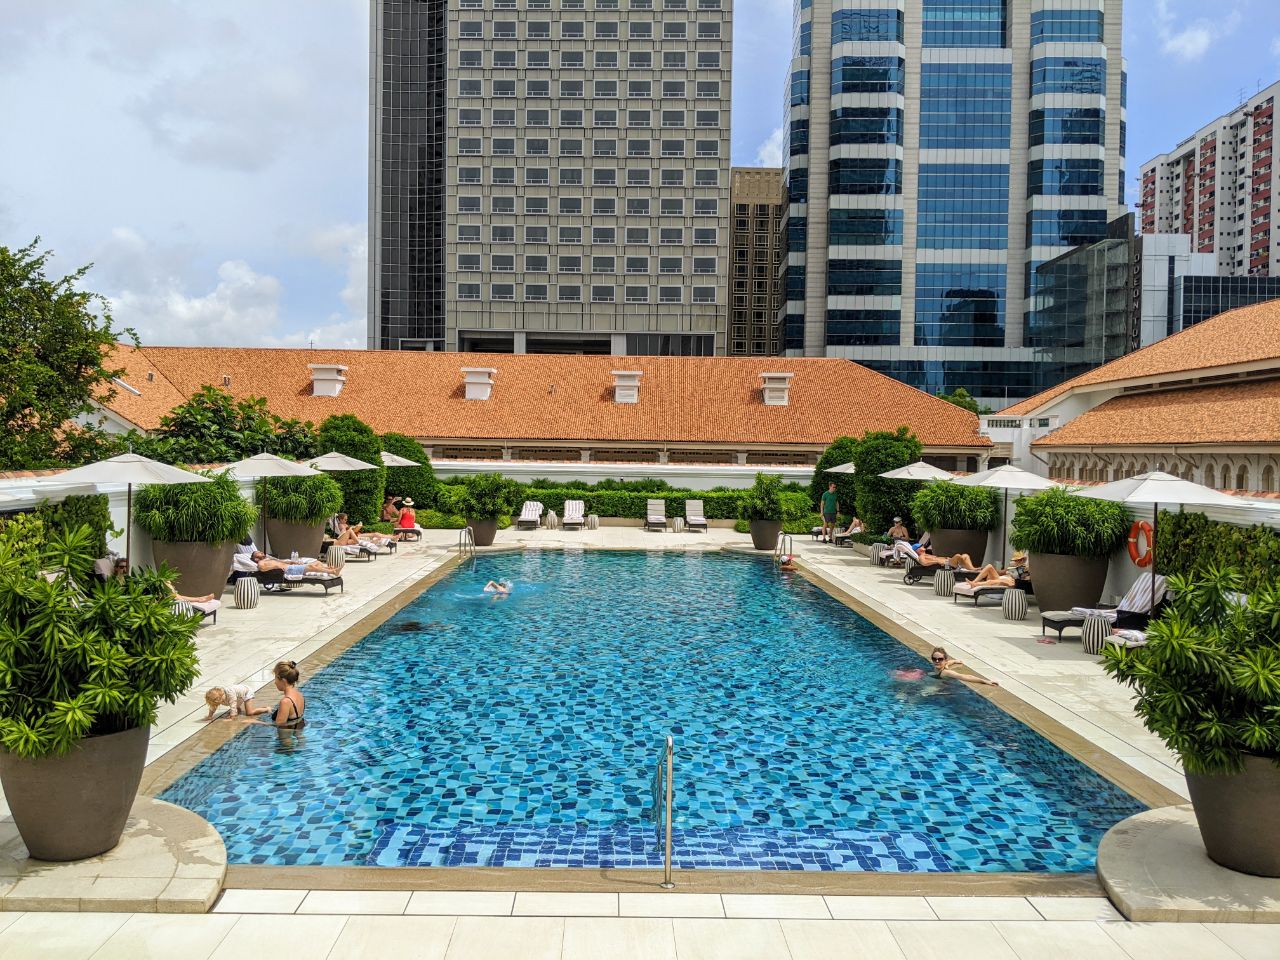 Raffles Hotel Swimming Pool